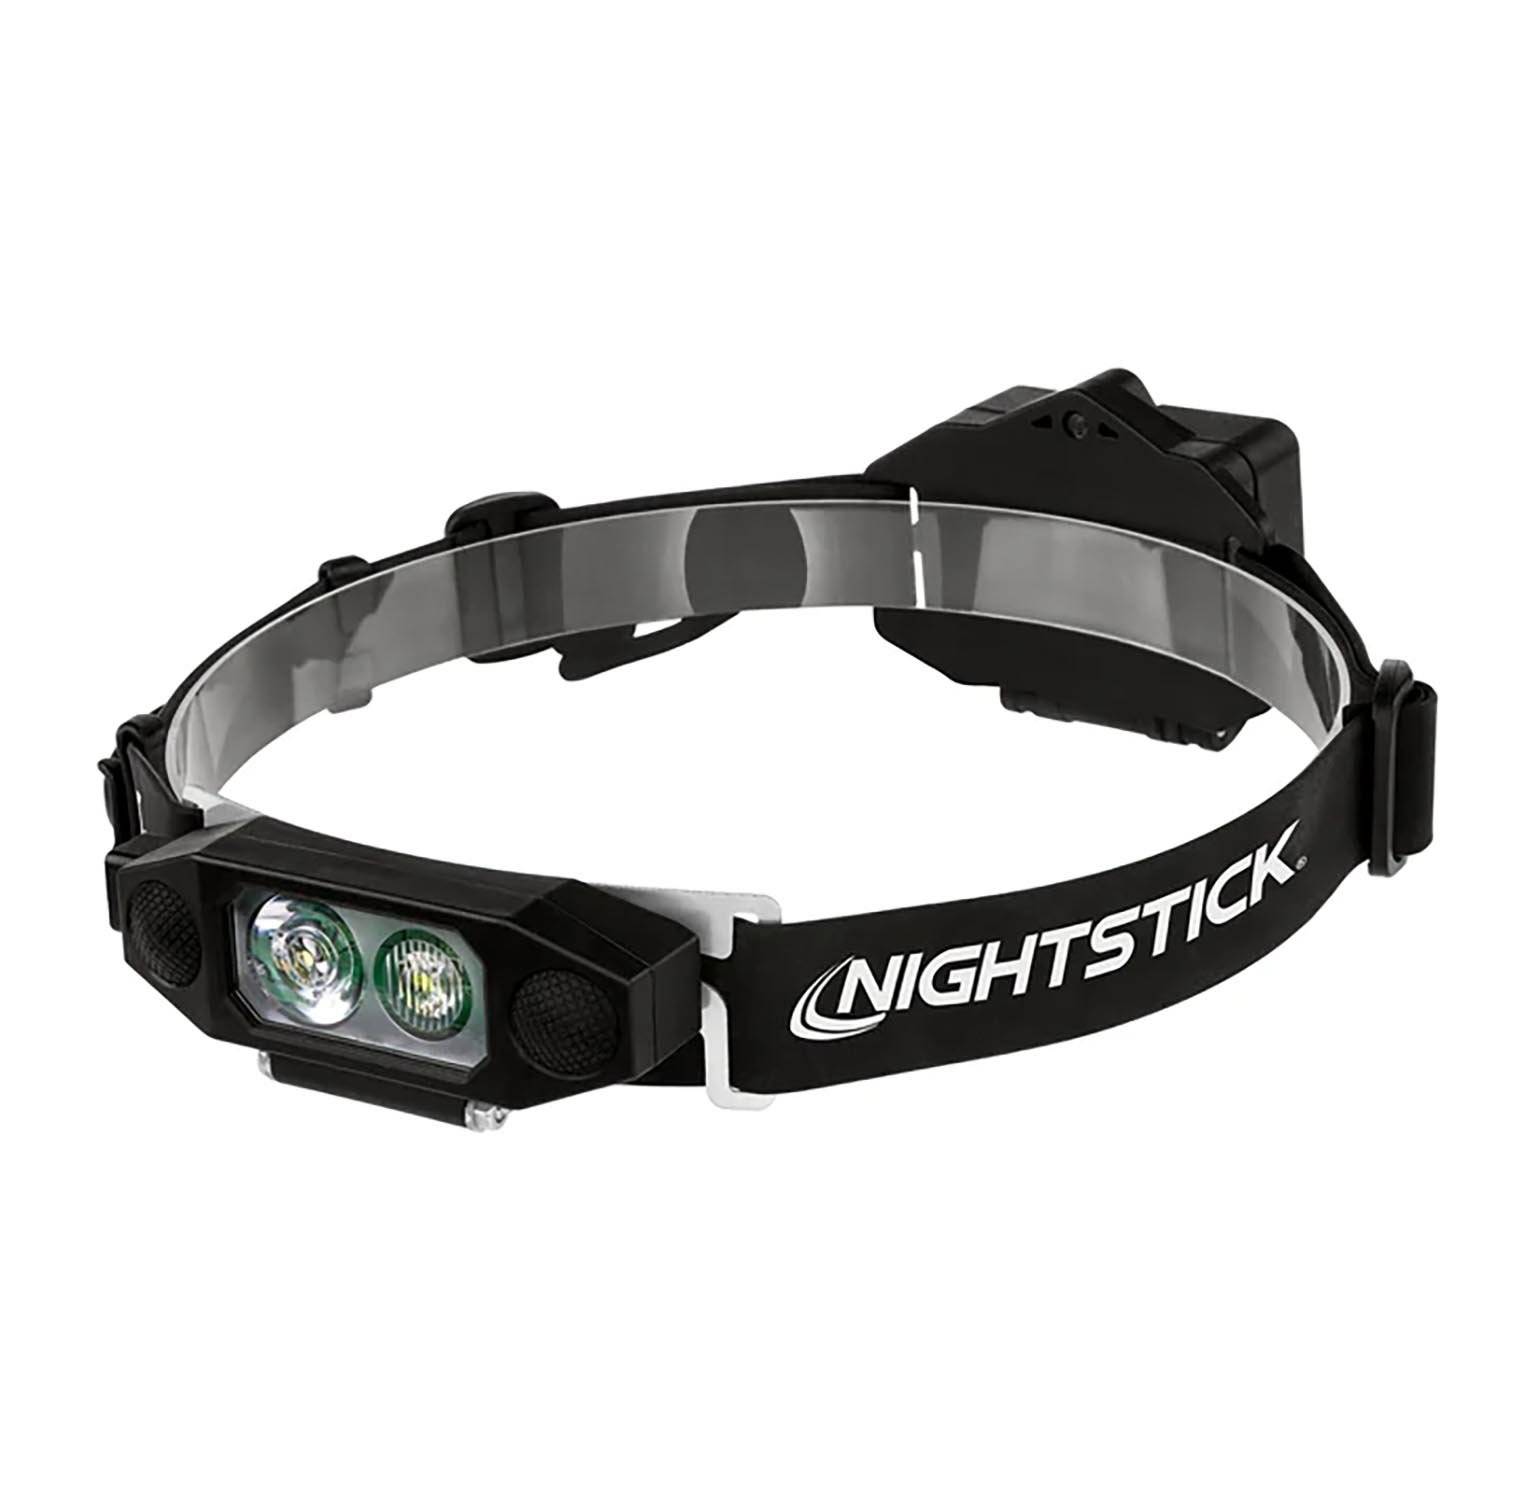 Nightstick Low Profile Dual Light Headlamp